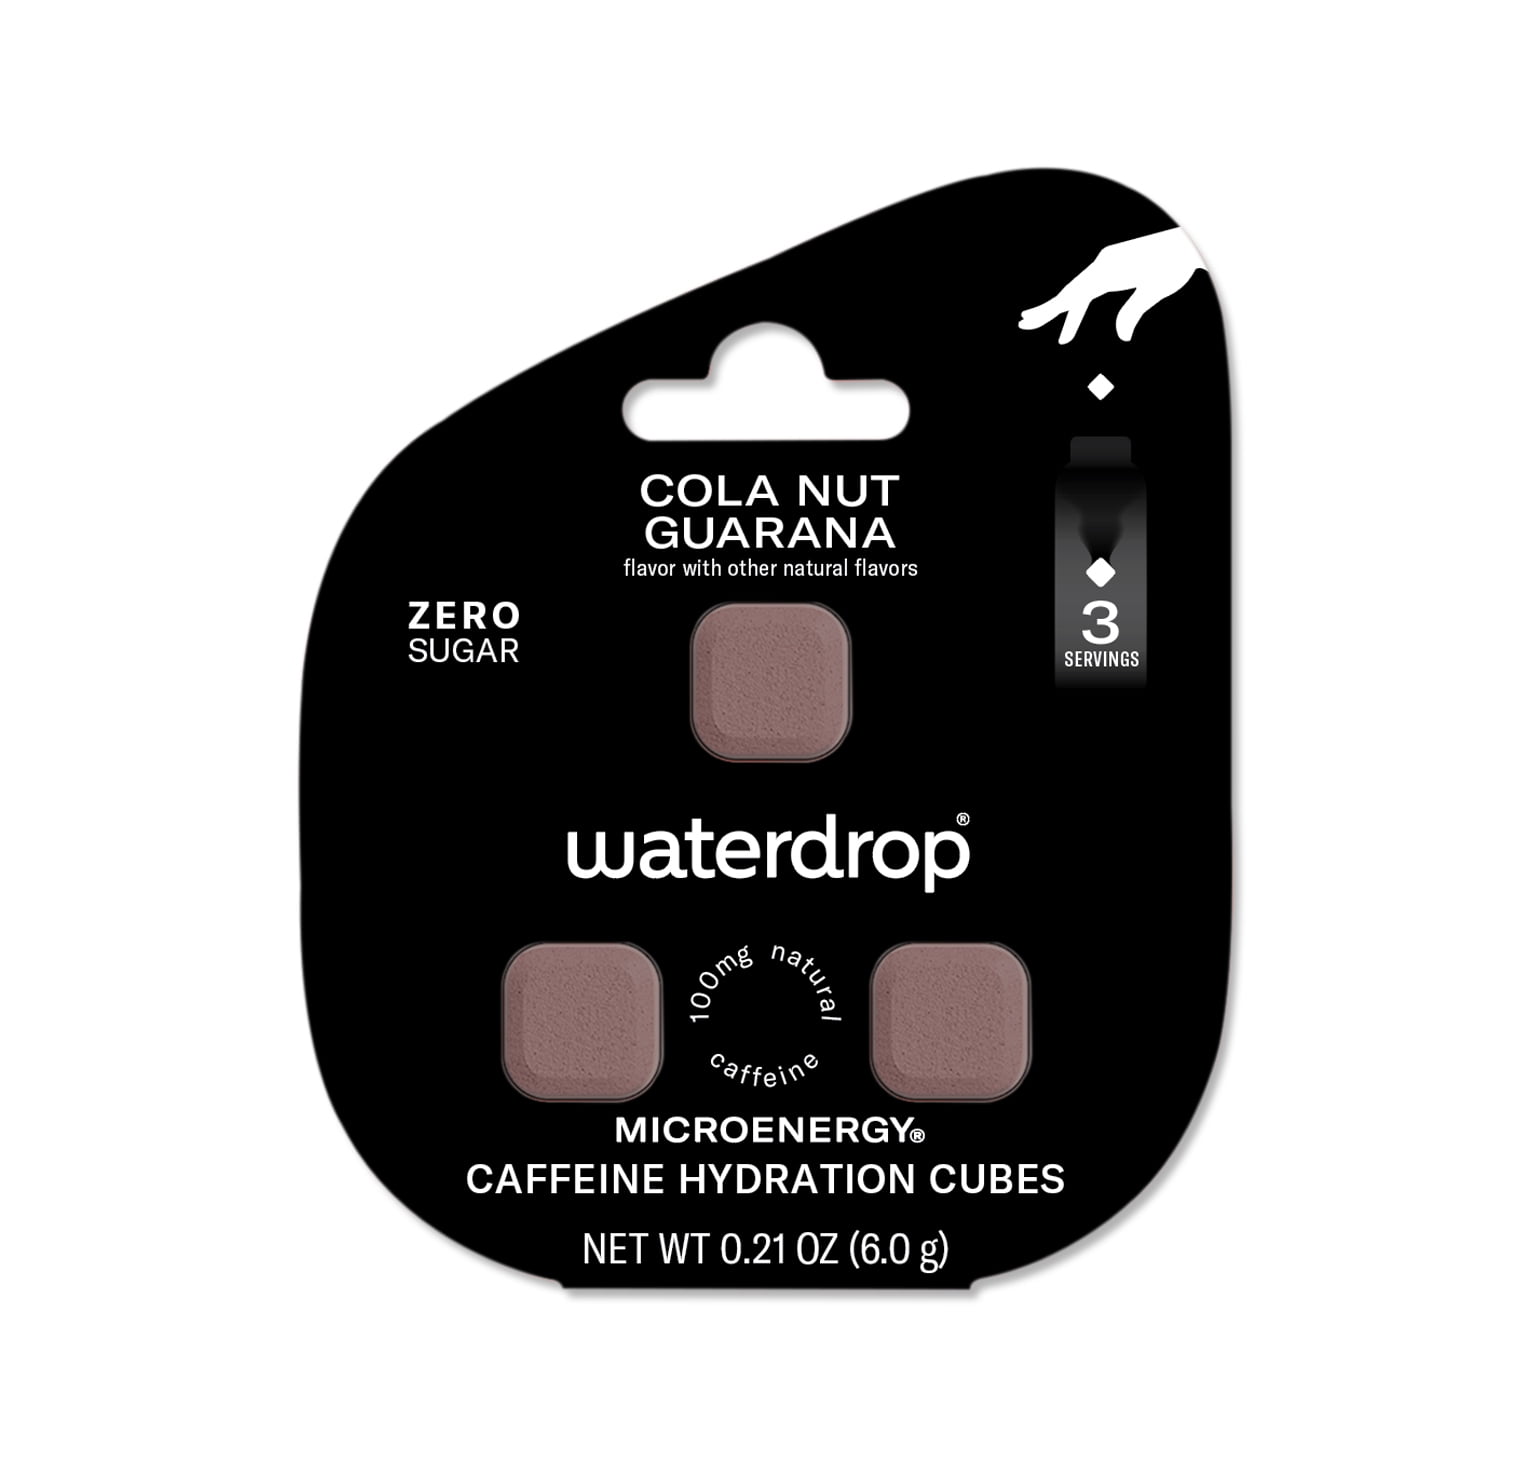 Microenergy Nero Waterdrop - boisson caféinée goût mûre & cola